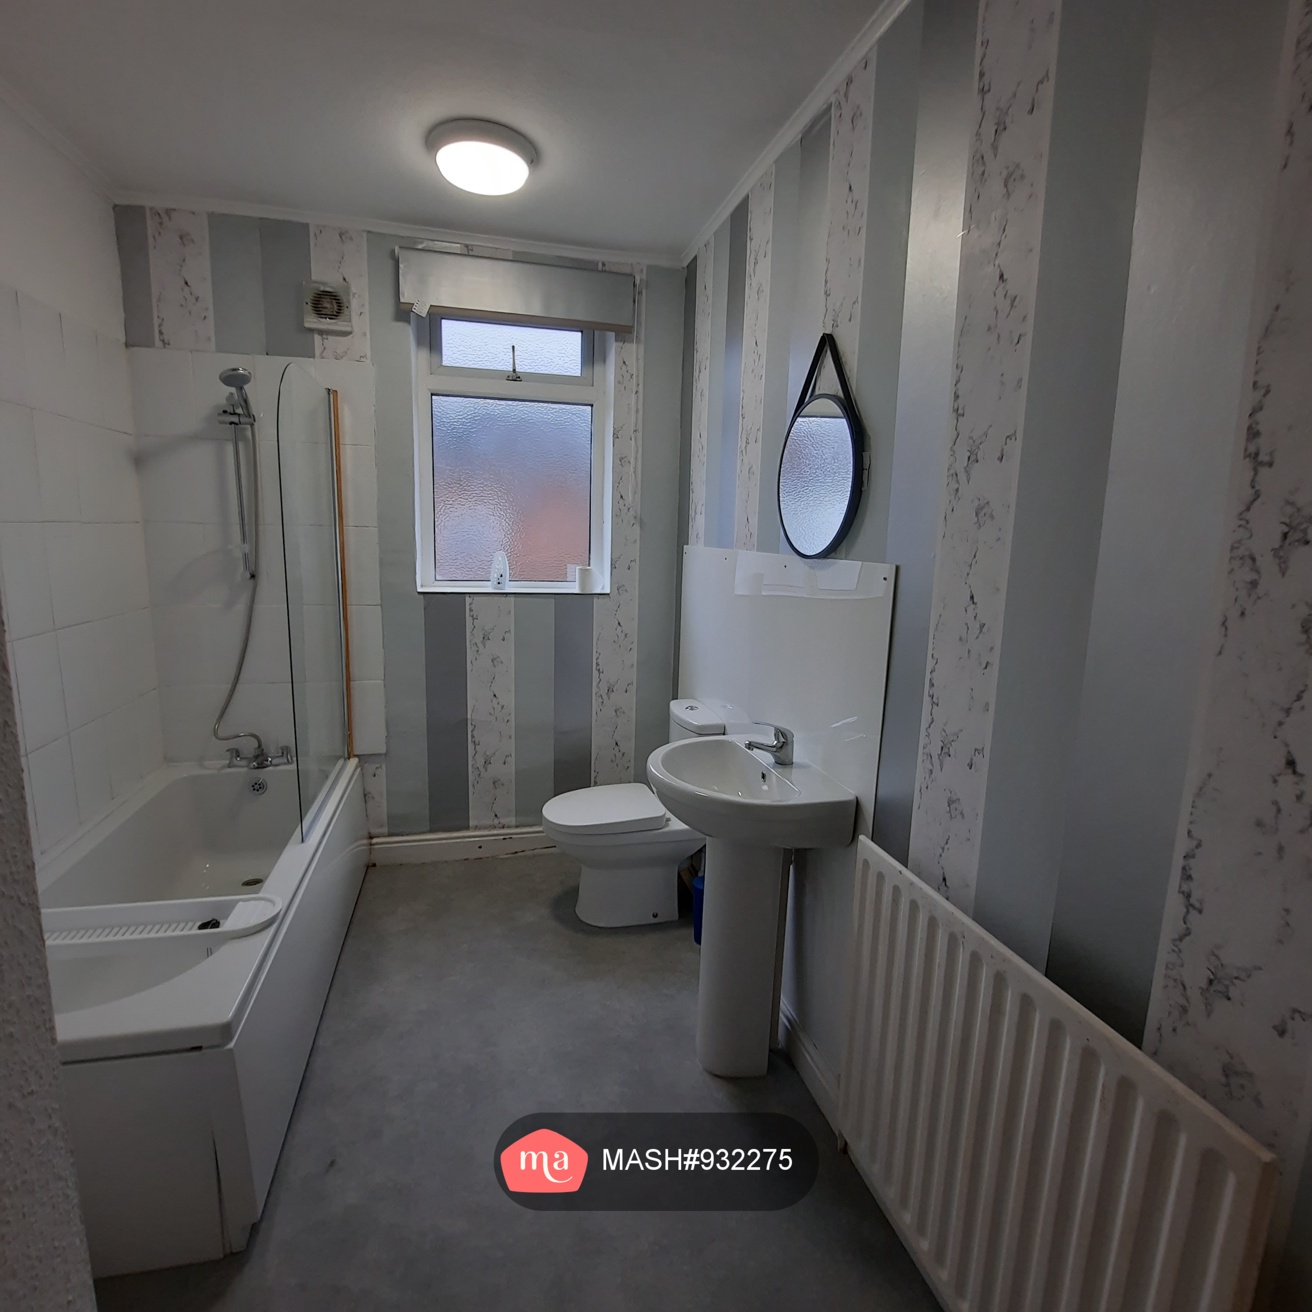 2 Bedroom Terraced to rent in Gainsborough - Mashroom